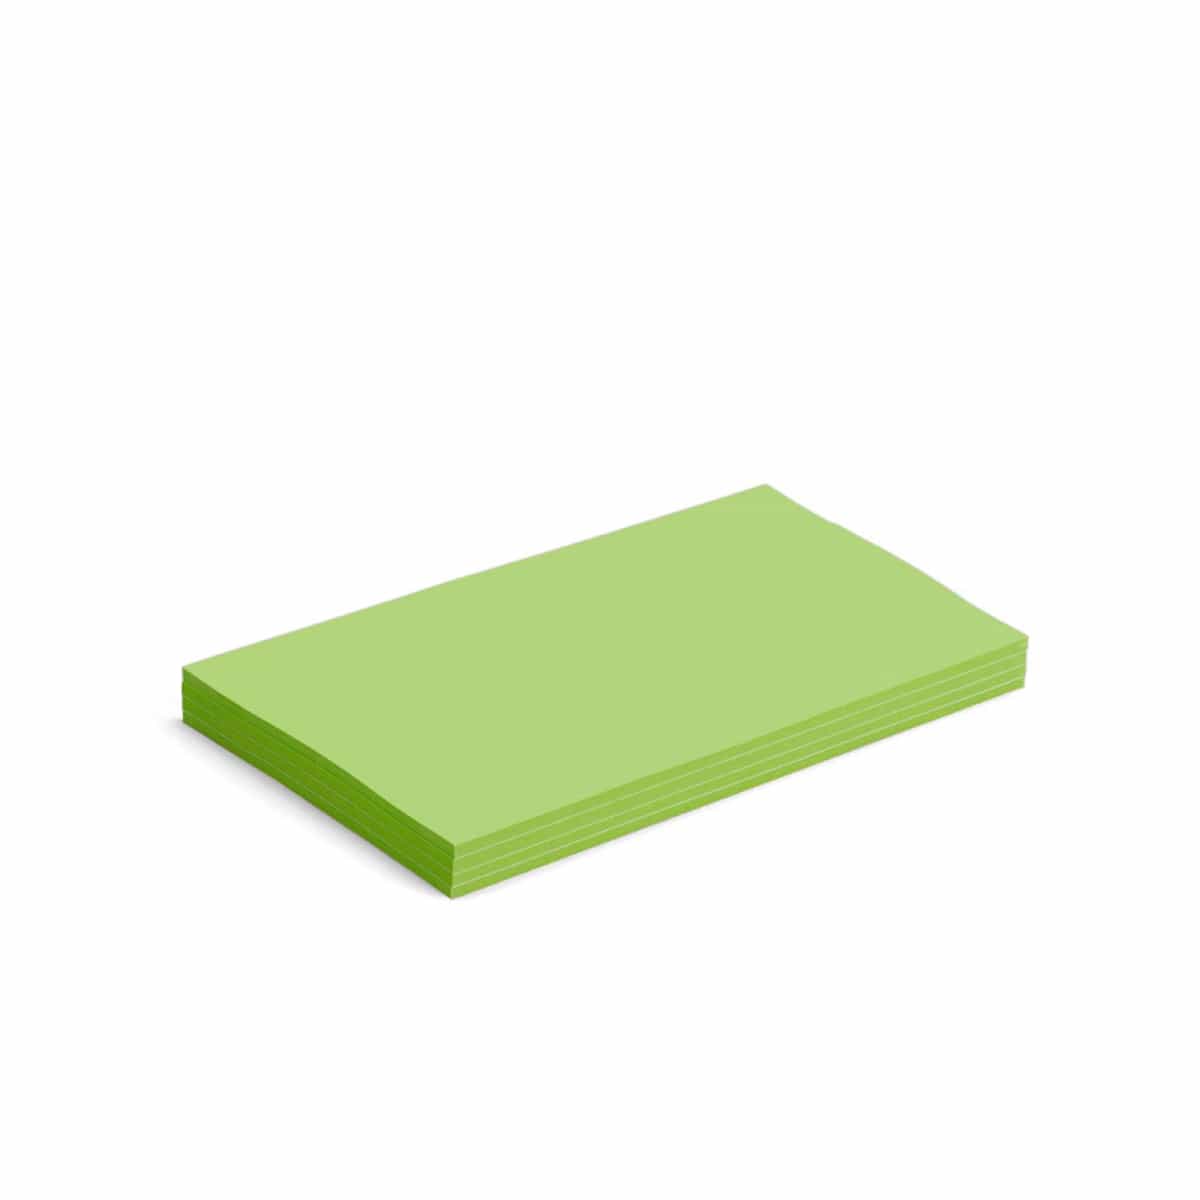 Stick- It Cards, large rectangular, 100 sheets, single colors- 4 grün